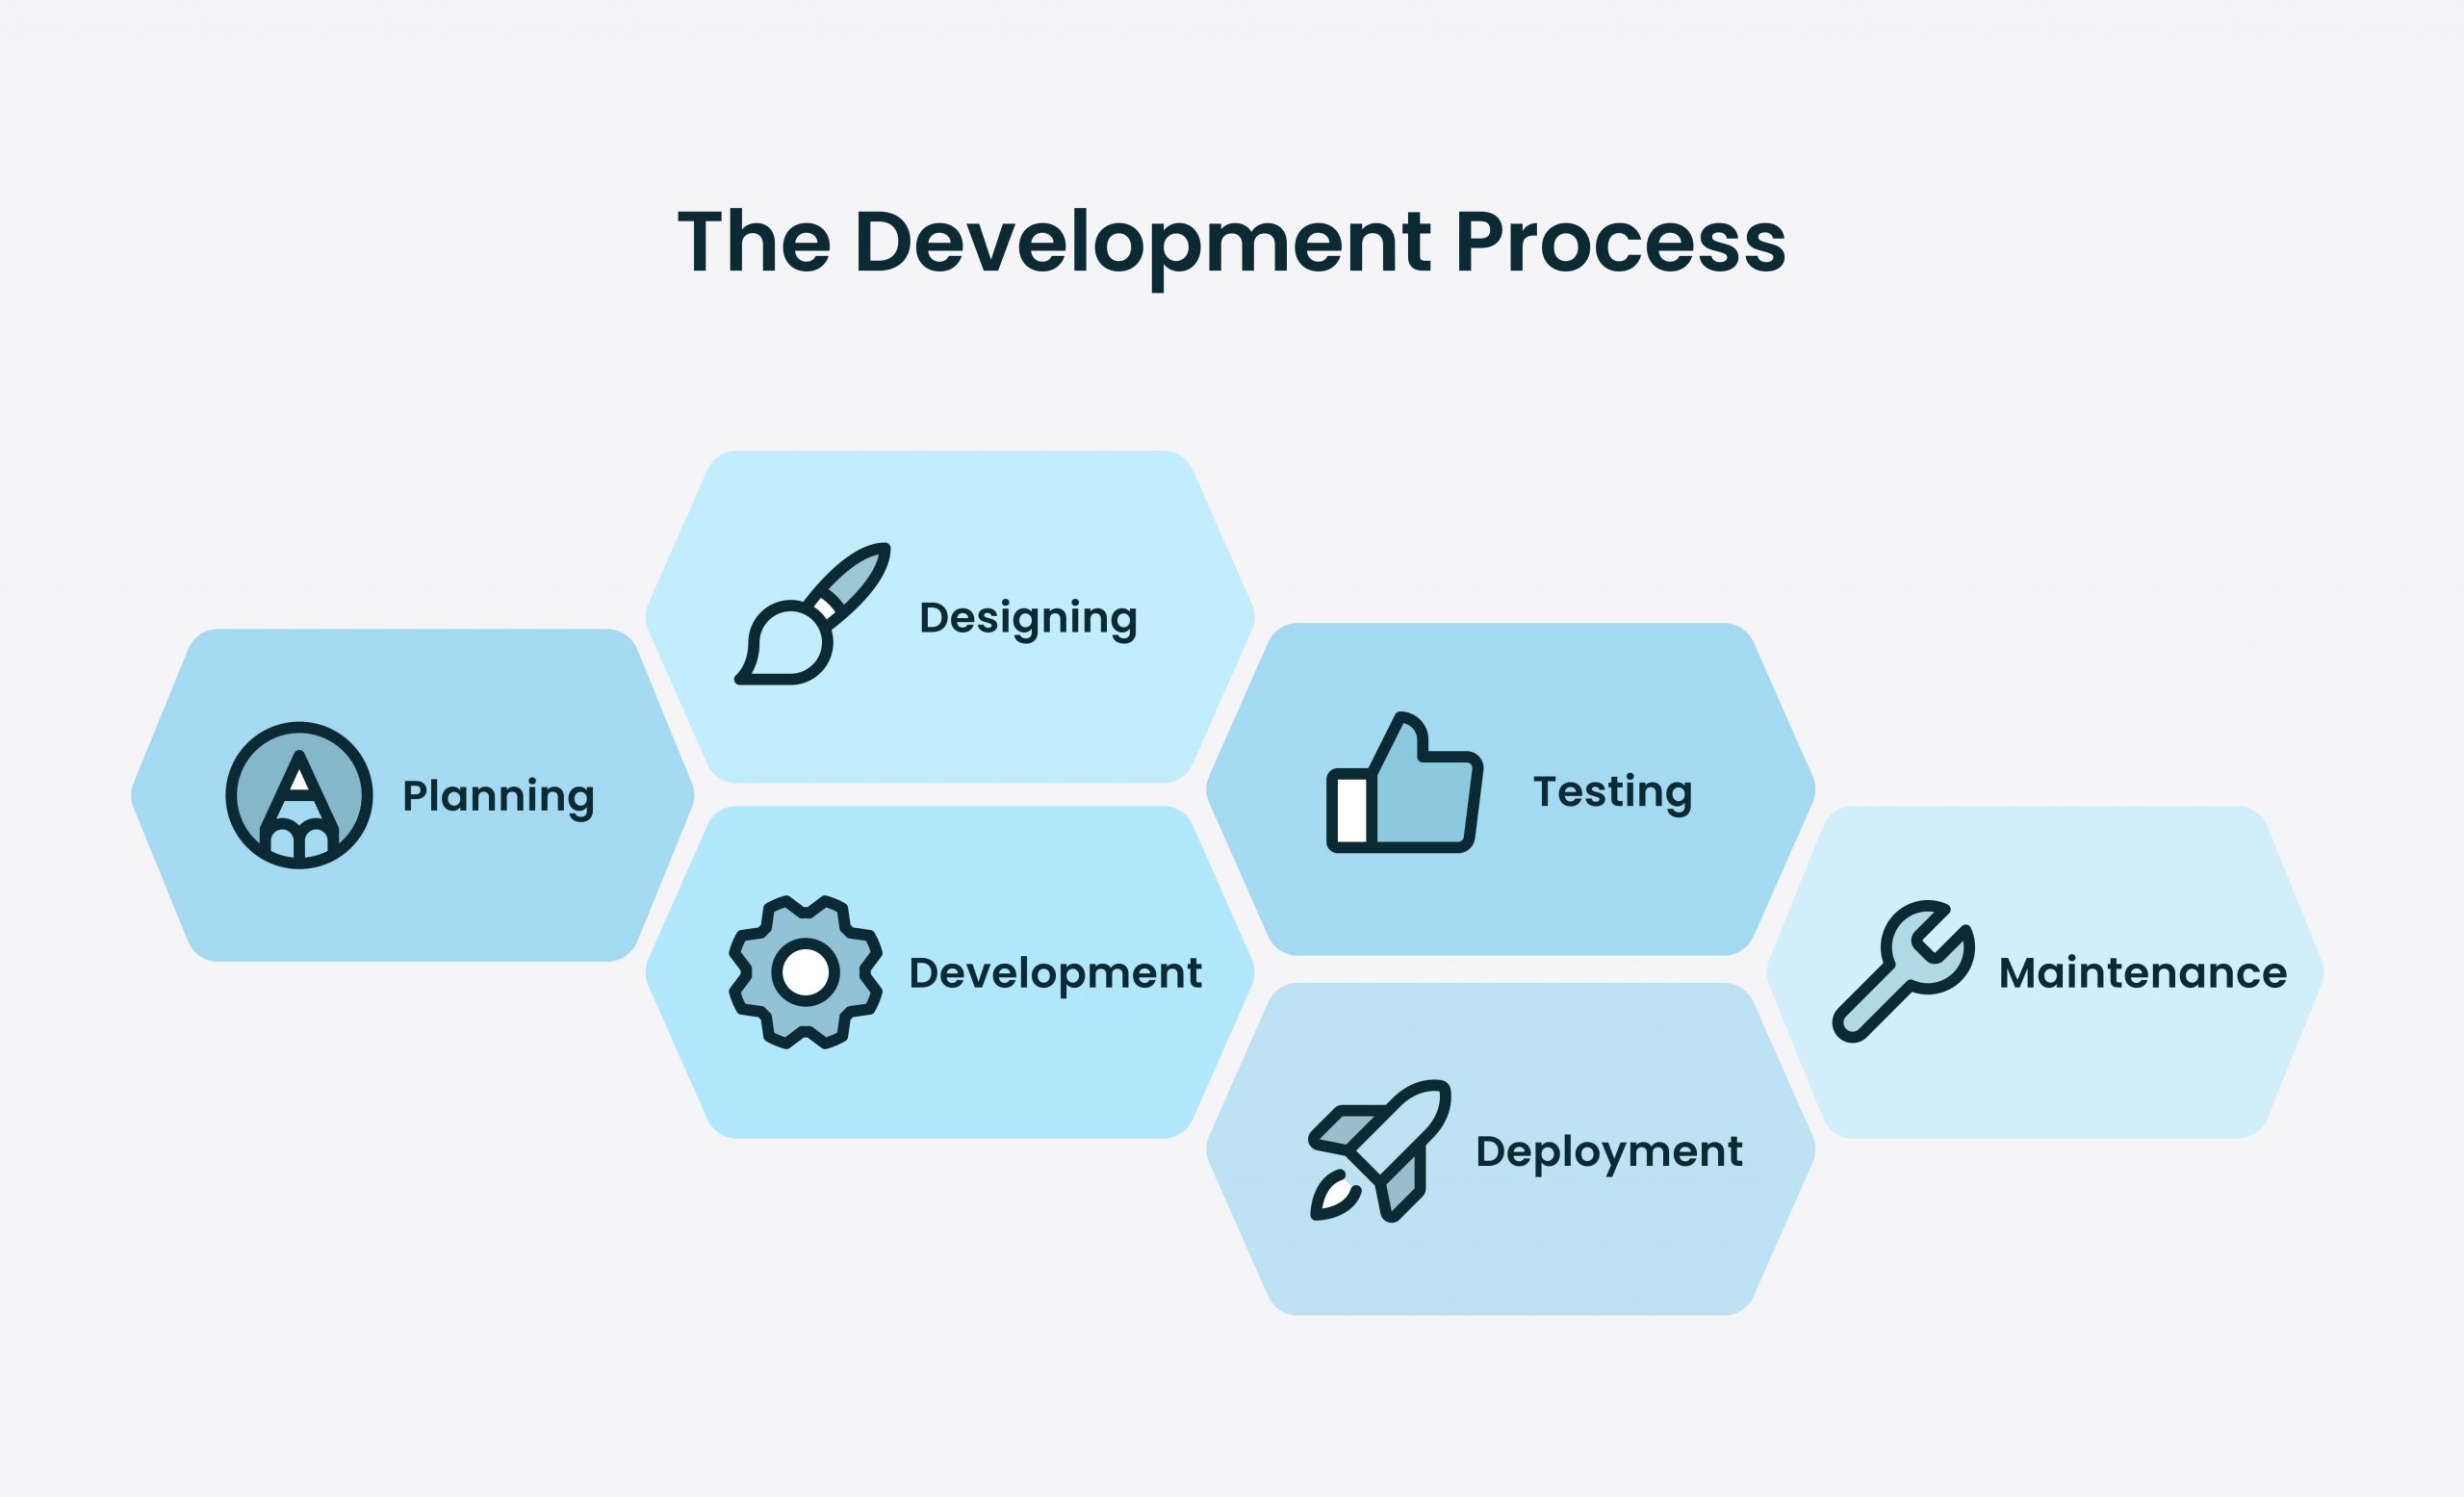 The Development Process: Planning, Designing, Development, Testing, Deployment, Maintenance****